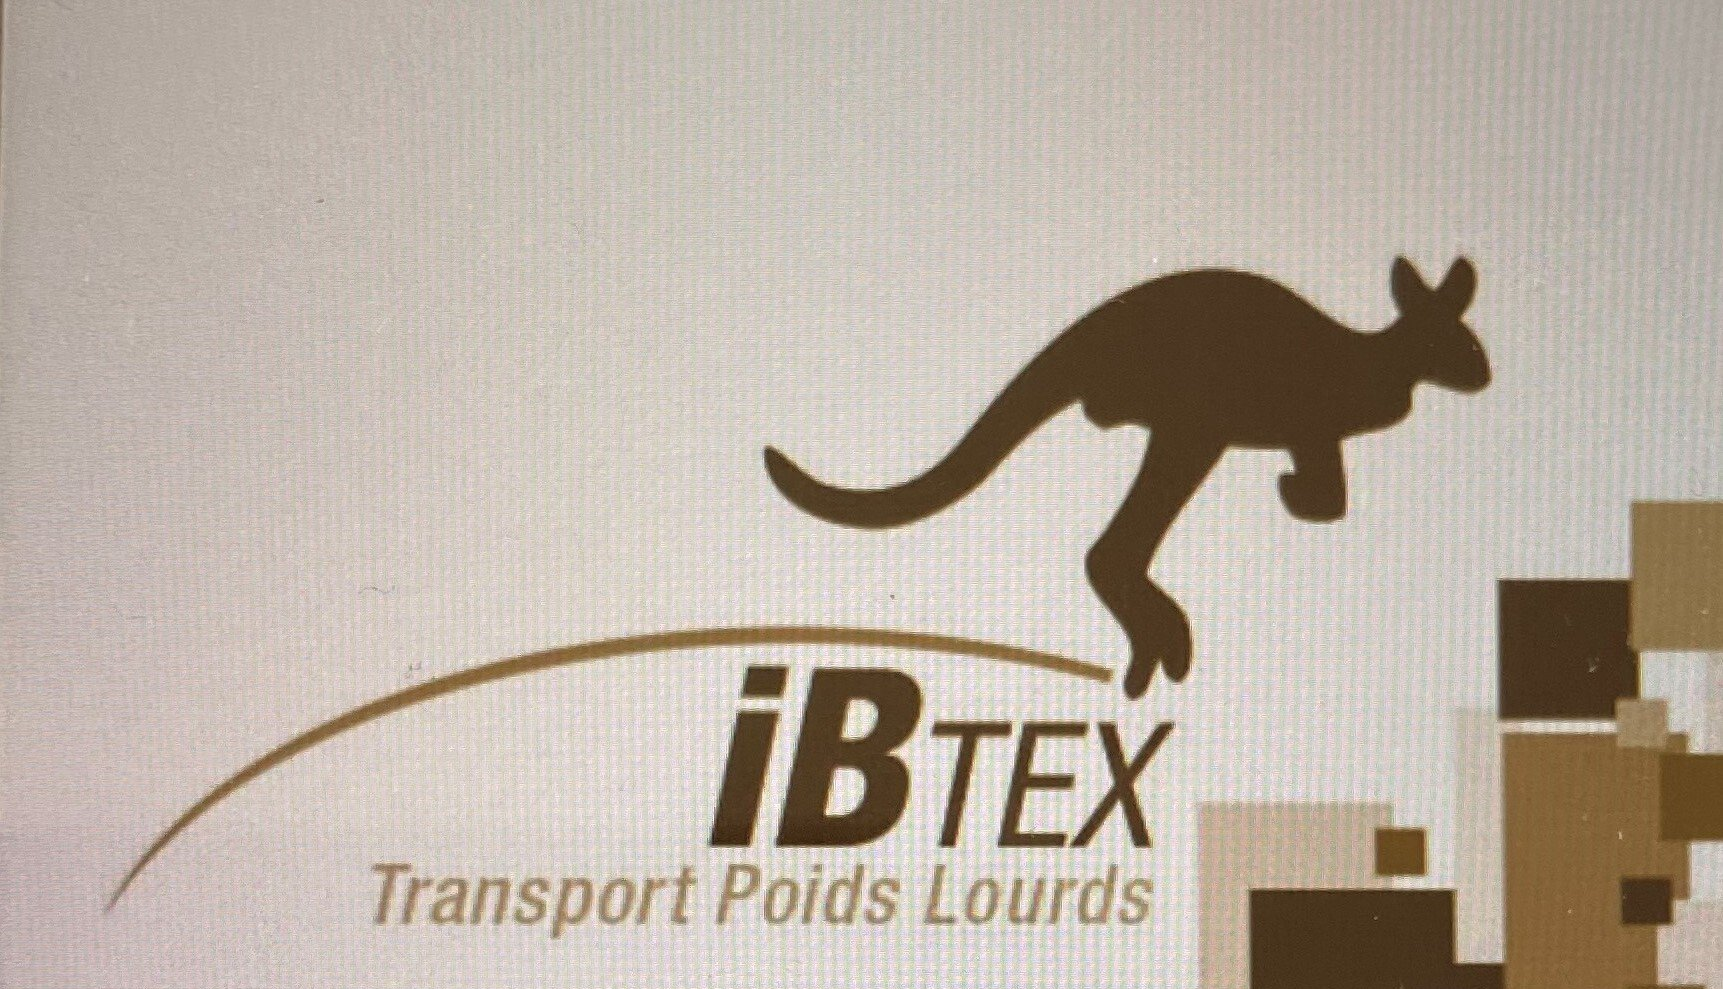 IBtex transport poids lourds